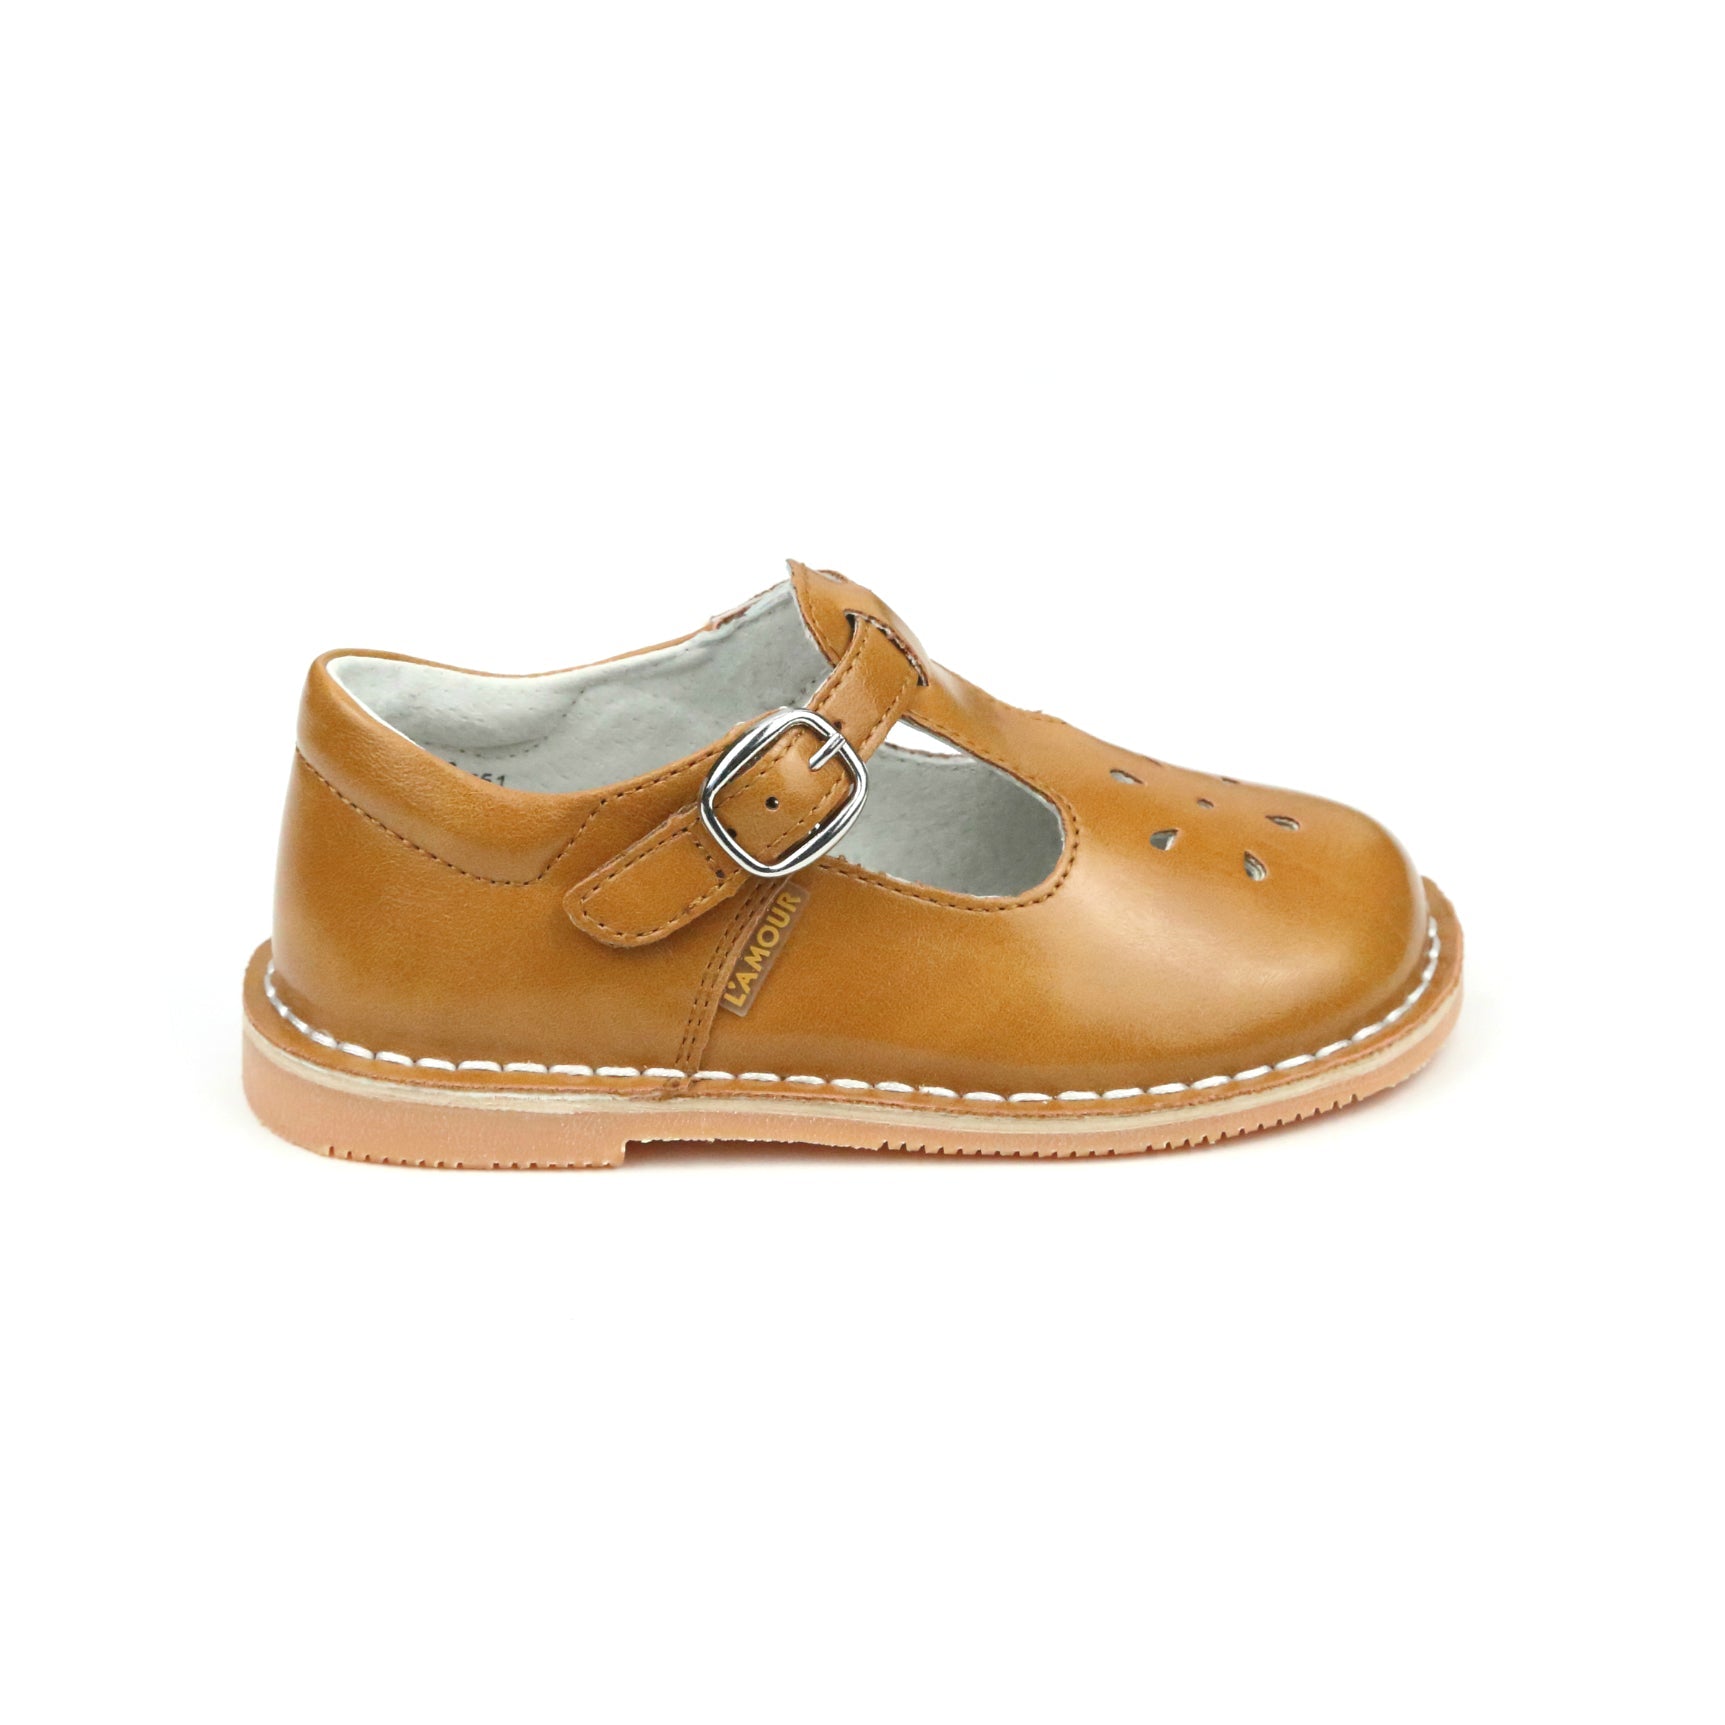 L'Amour Girls Frances T-Strap Classic School Shoe Mary Jane